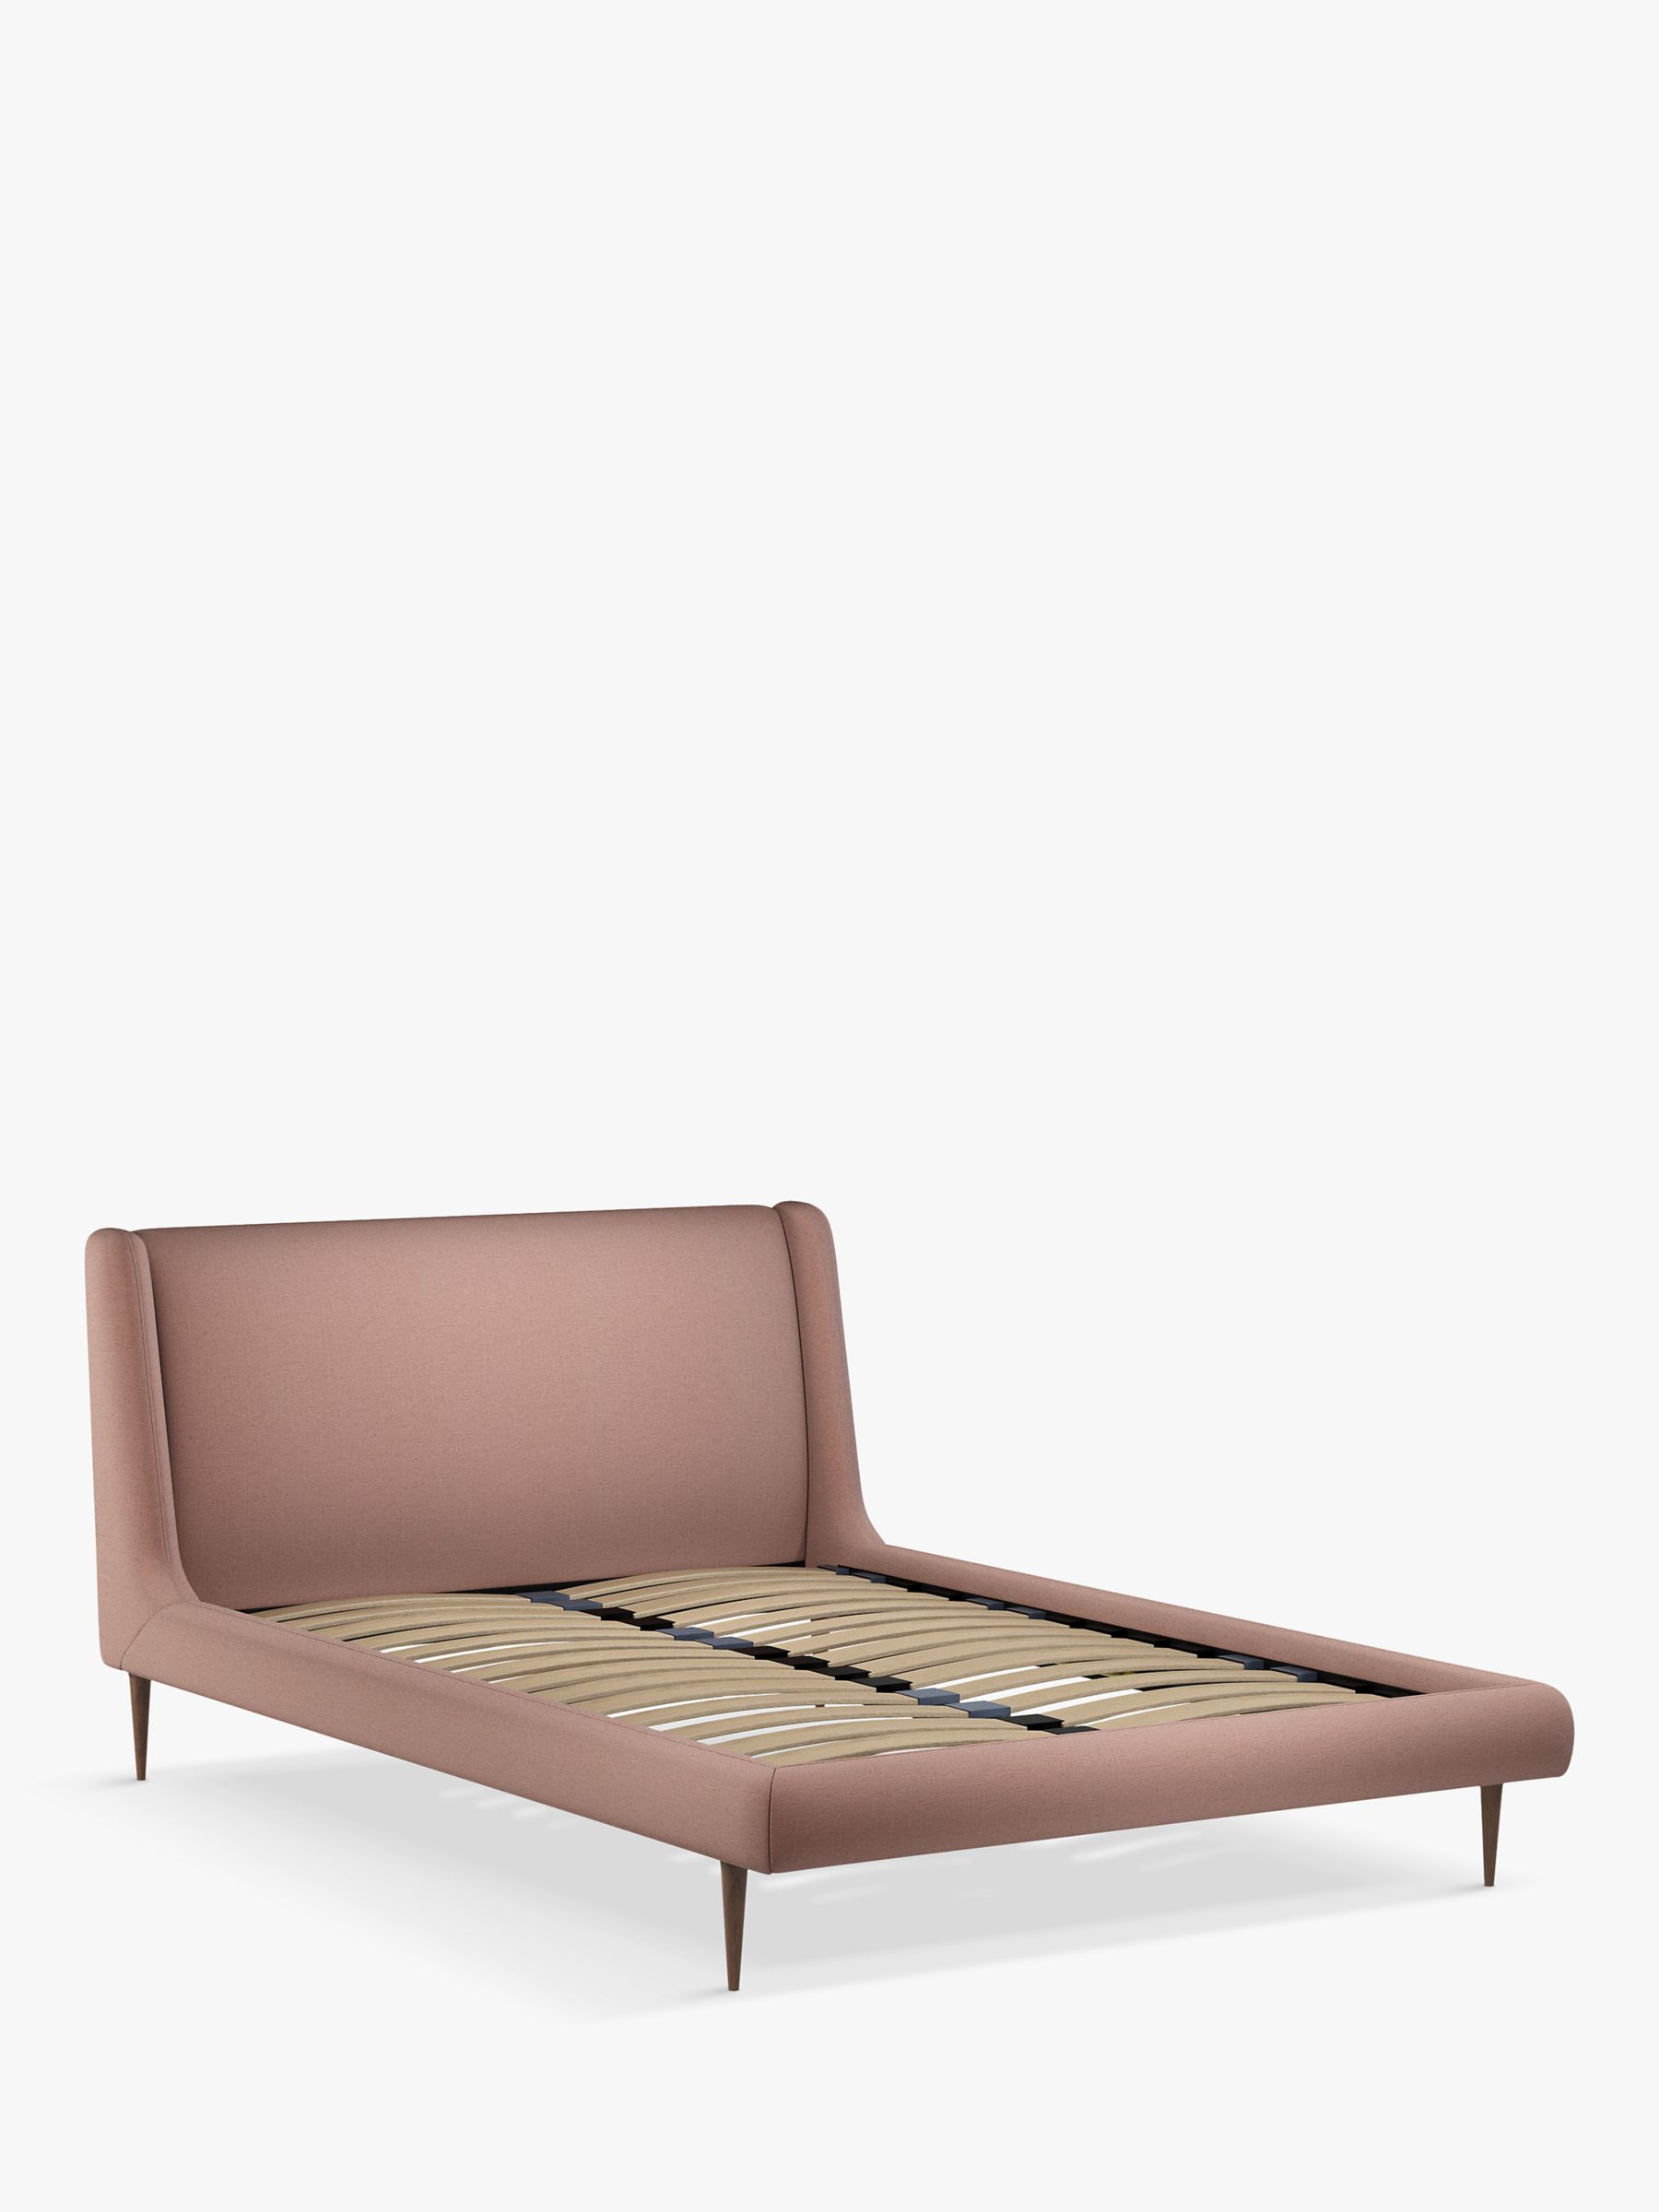 John Lewis Mid-Century Sweep Upholstered Bed Frame, Super King Size